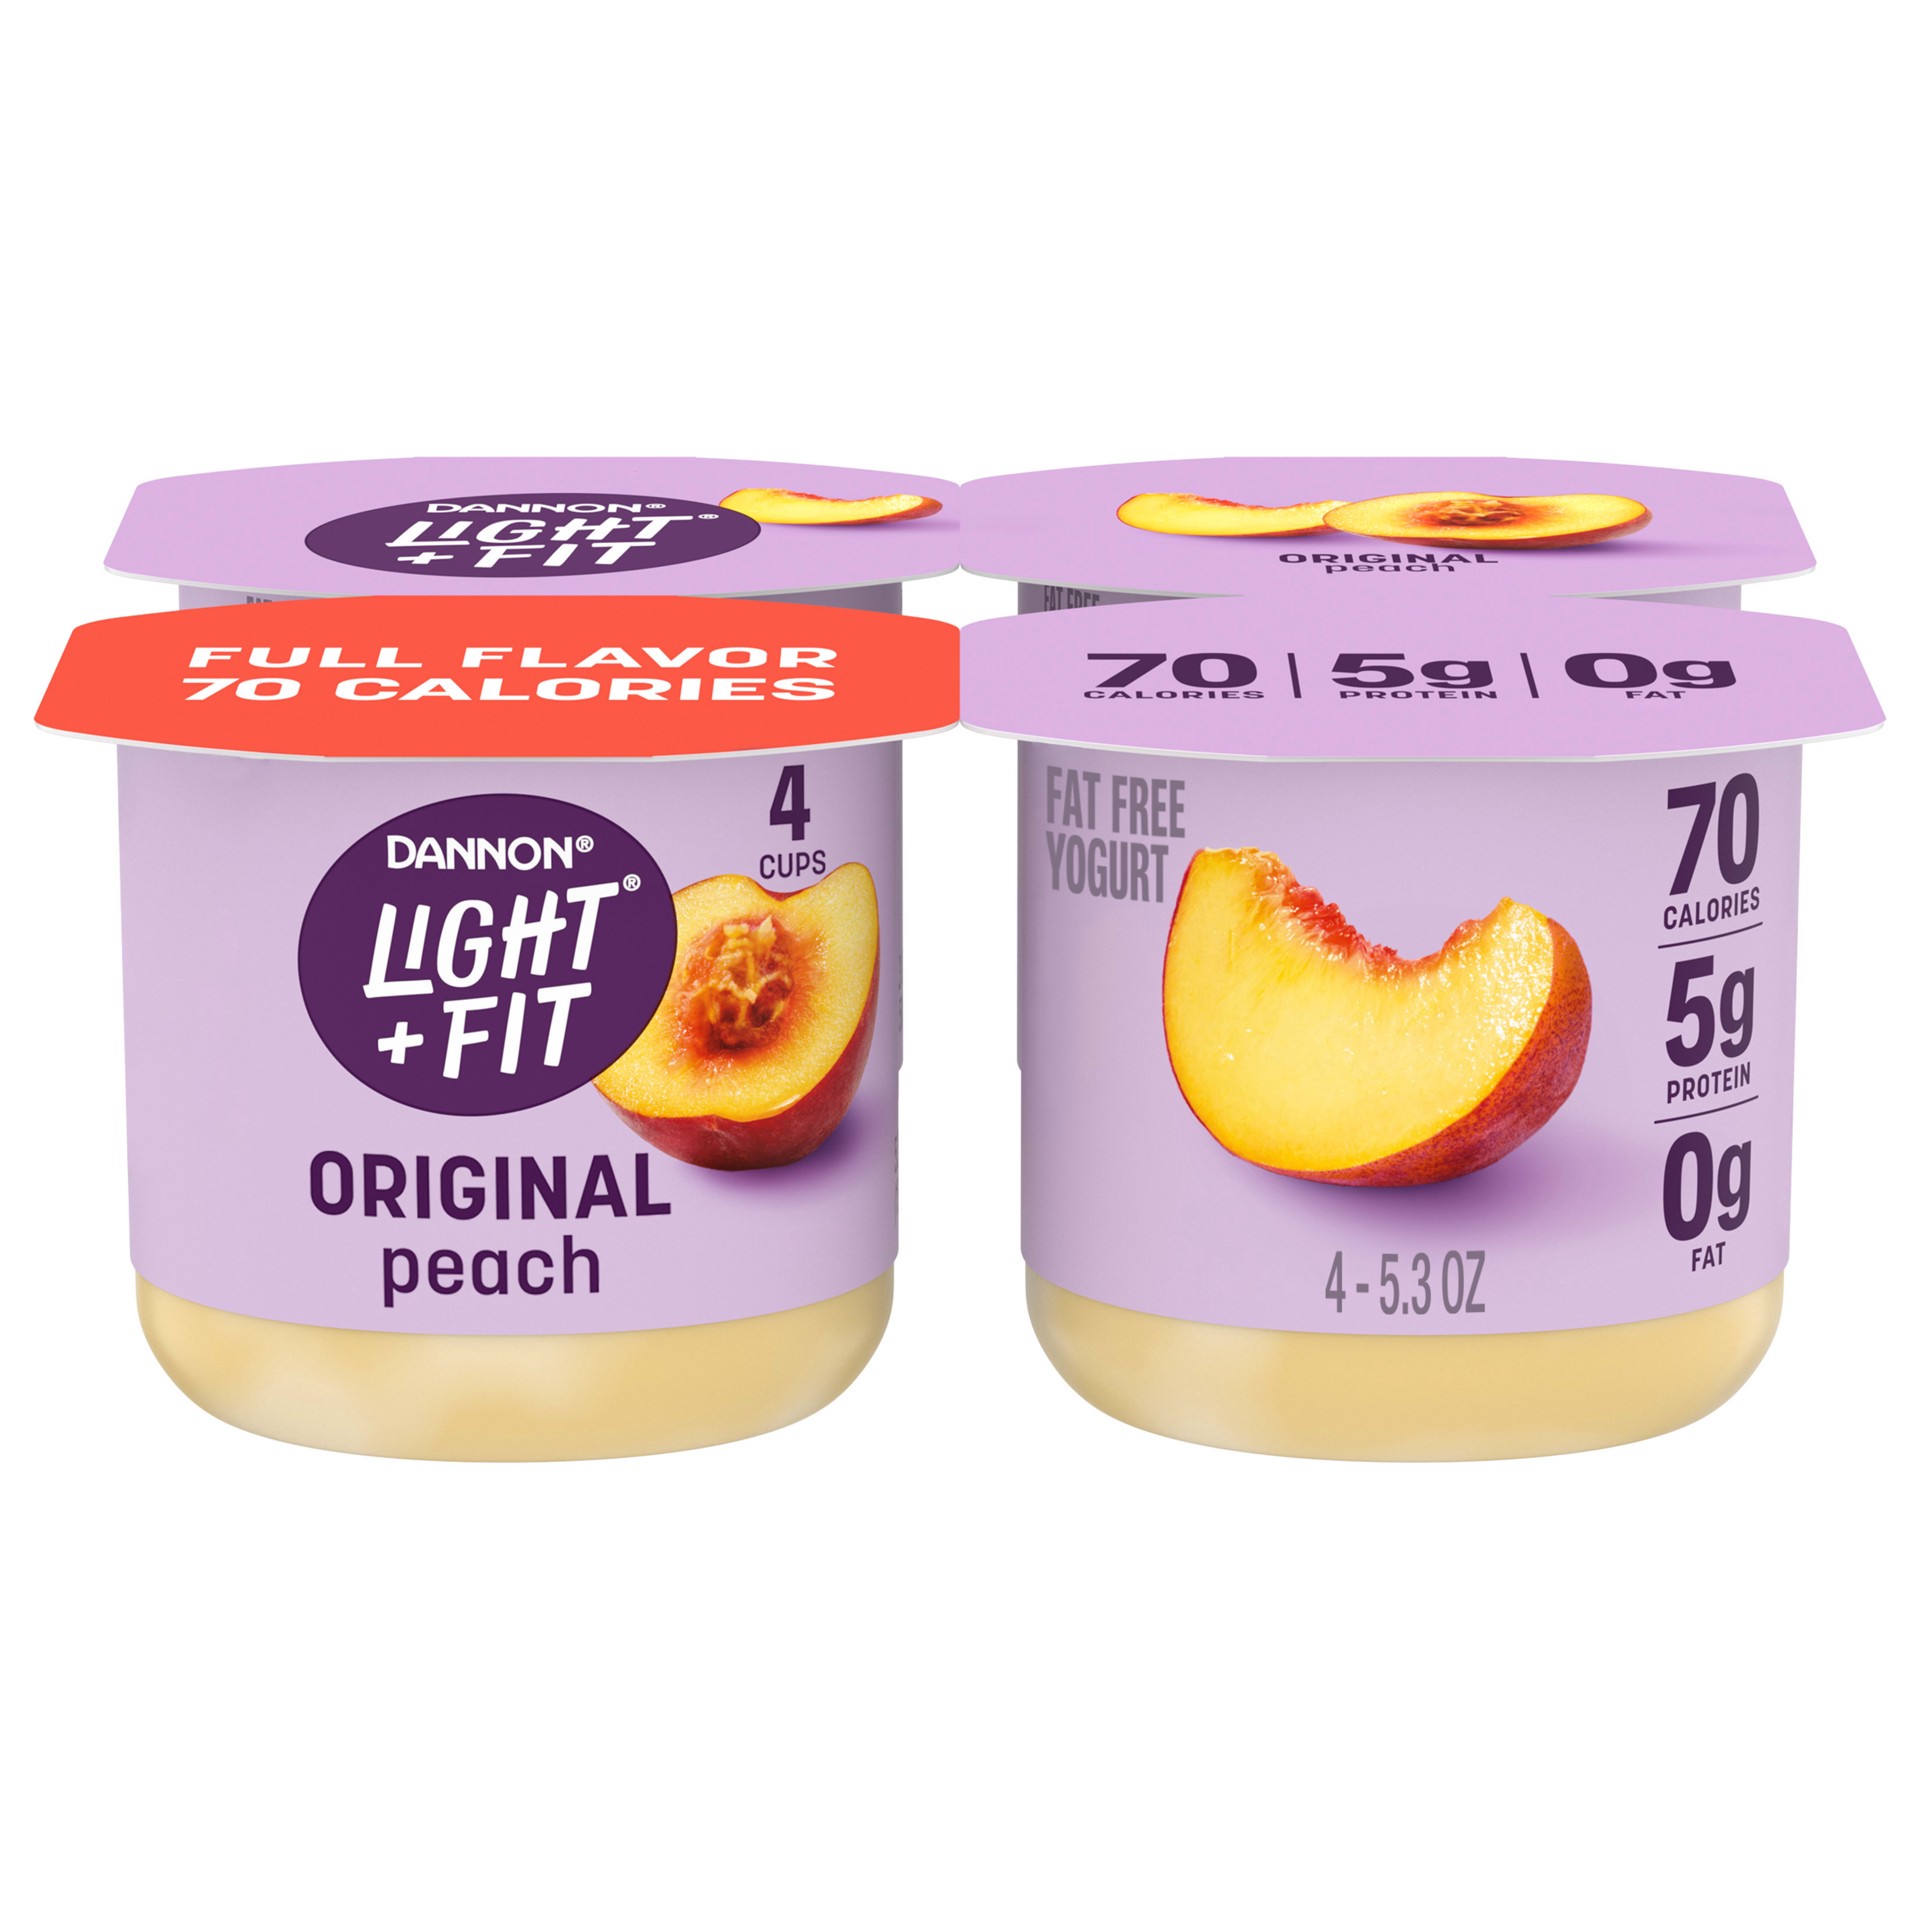 slide 1 of 10, Light + Fit Dannon Light + Fit Peach Original Nonfat Yogurt Pack, 0 Fat and 70 Calories, Creamy and Delicious Peach Yogurt, 4 Ct, 5.3 OZ Cups, 5.3 oz